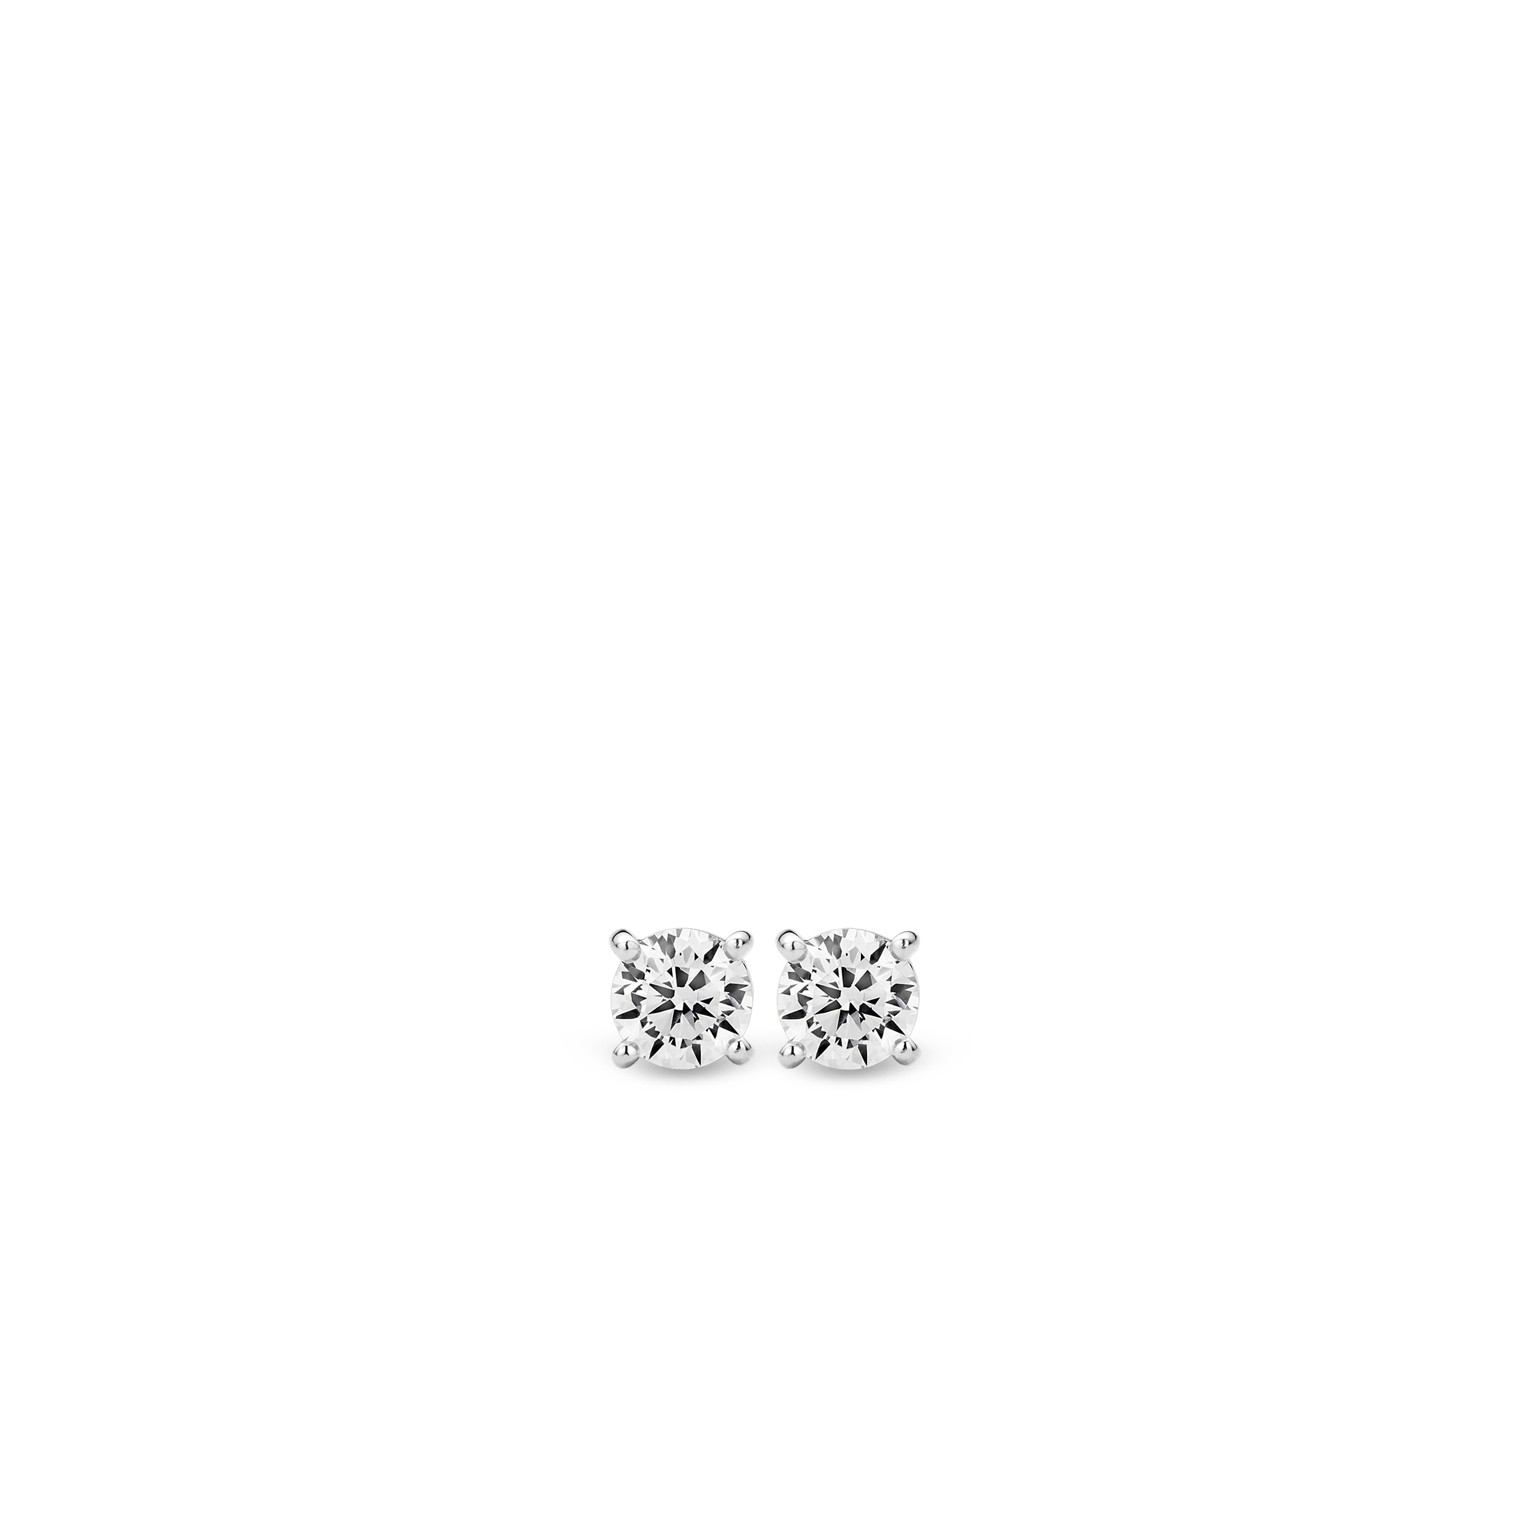 TI SENTO - Milano Earrings 7319ZI Image 2 Gala Jewelers Inc. White Oak, PA